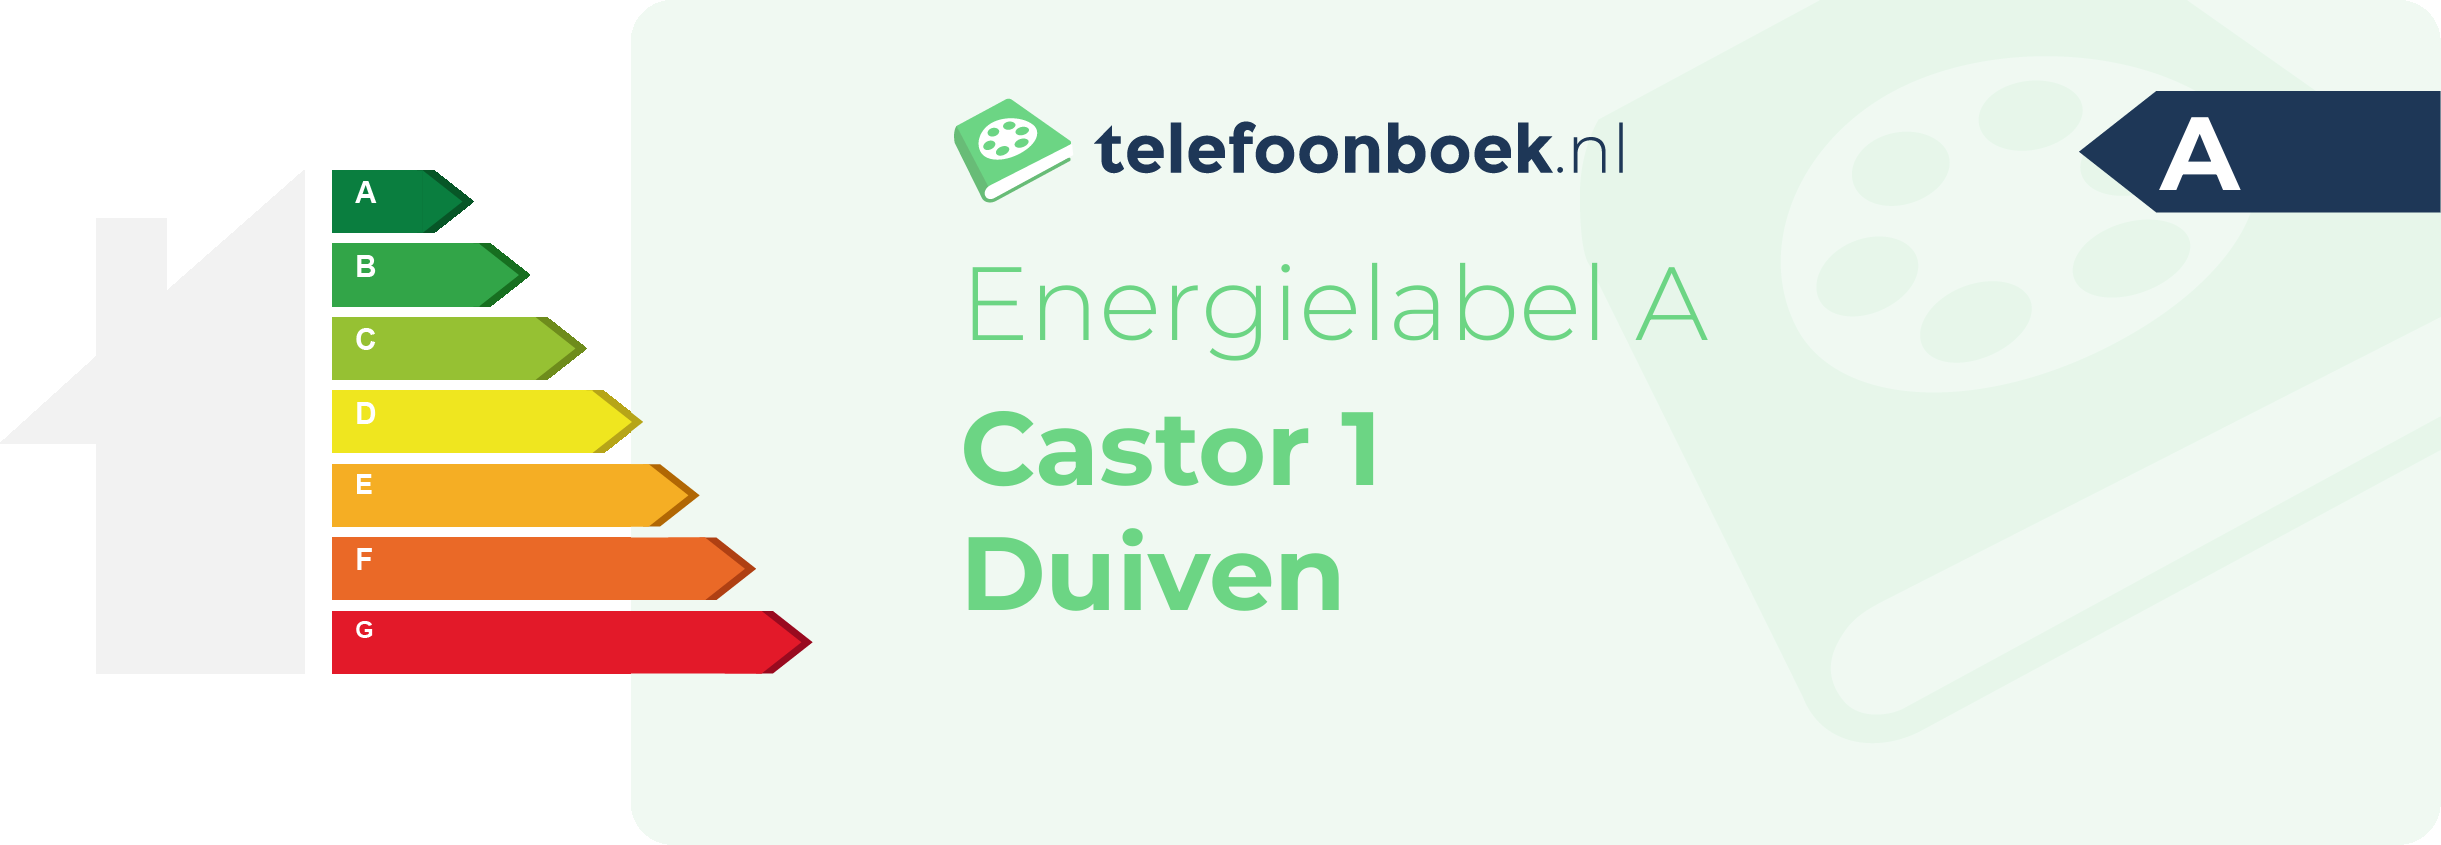 Energielabel Castor 1 Duiven